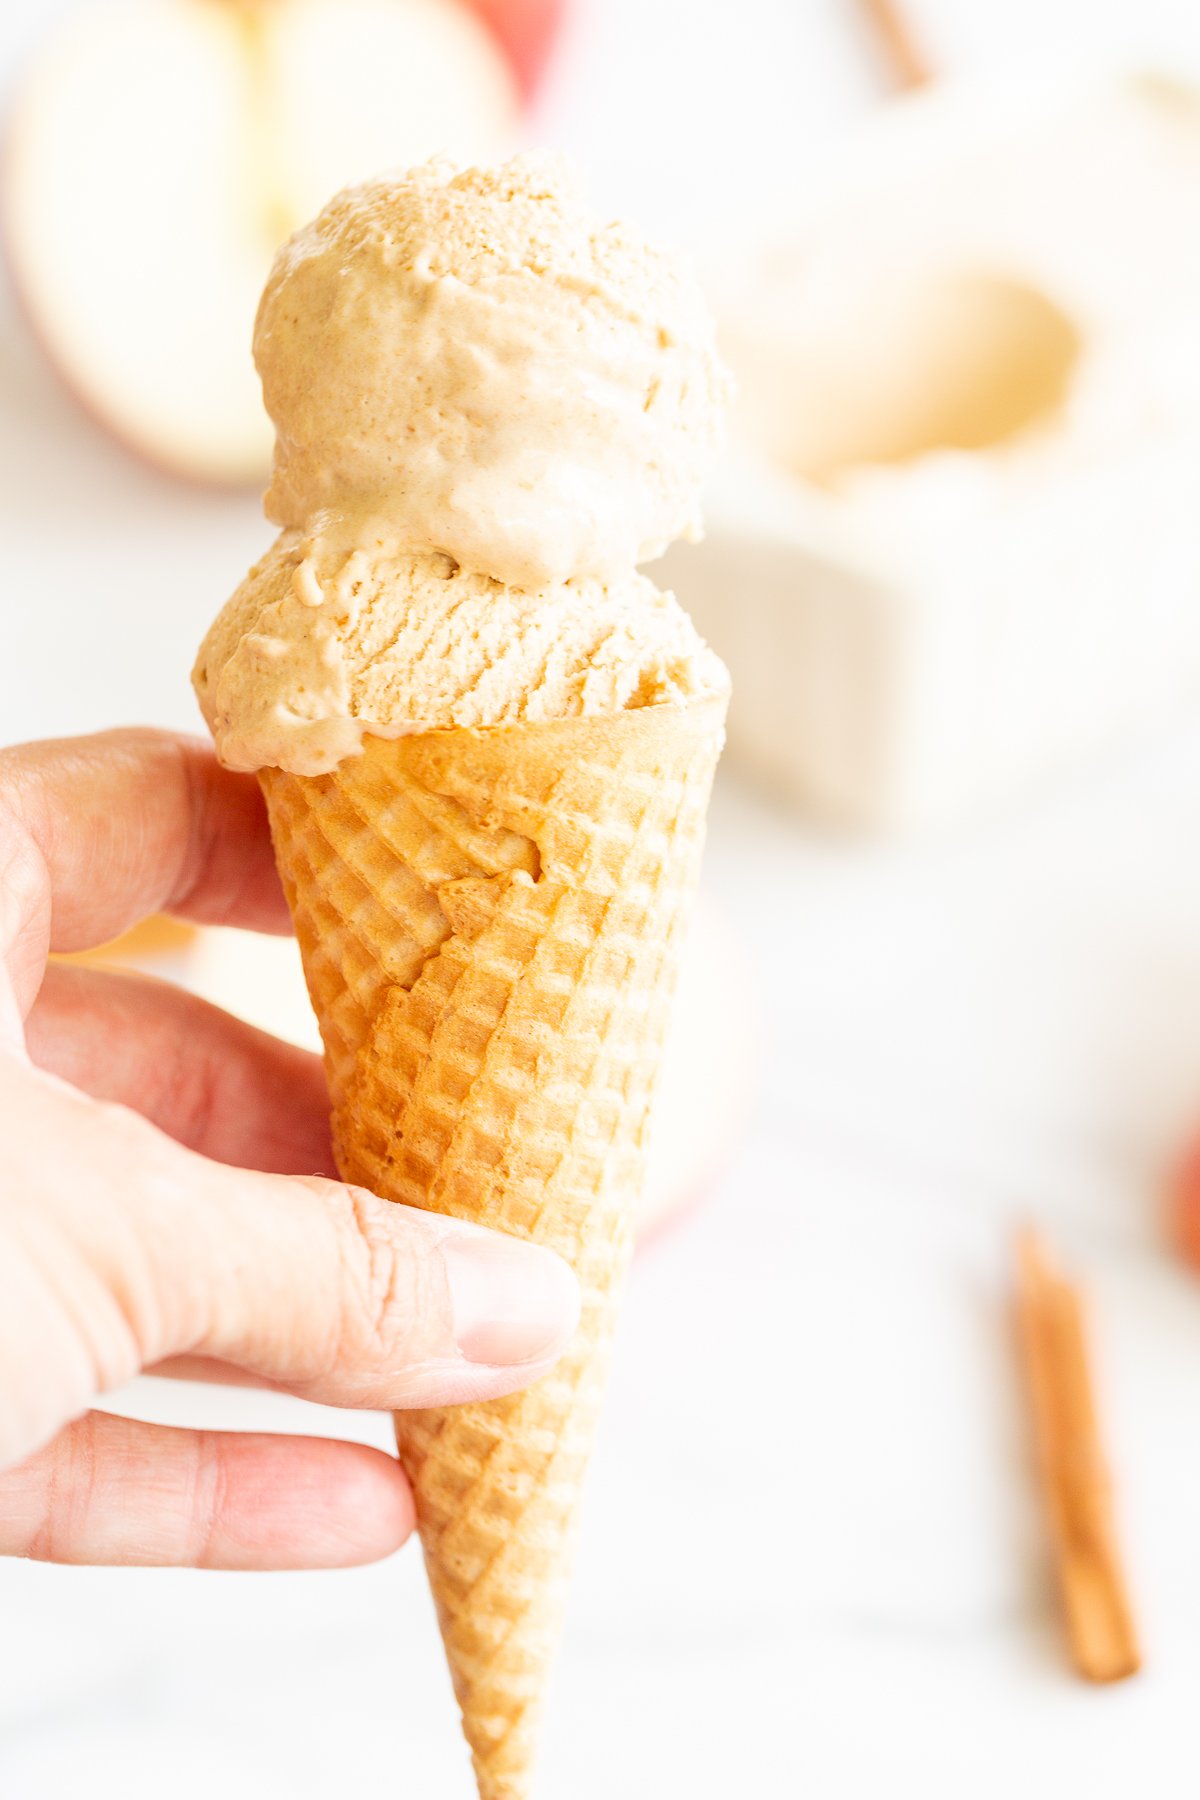 A hand holding an apple ice cream cone 